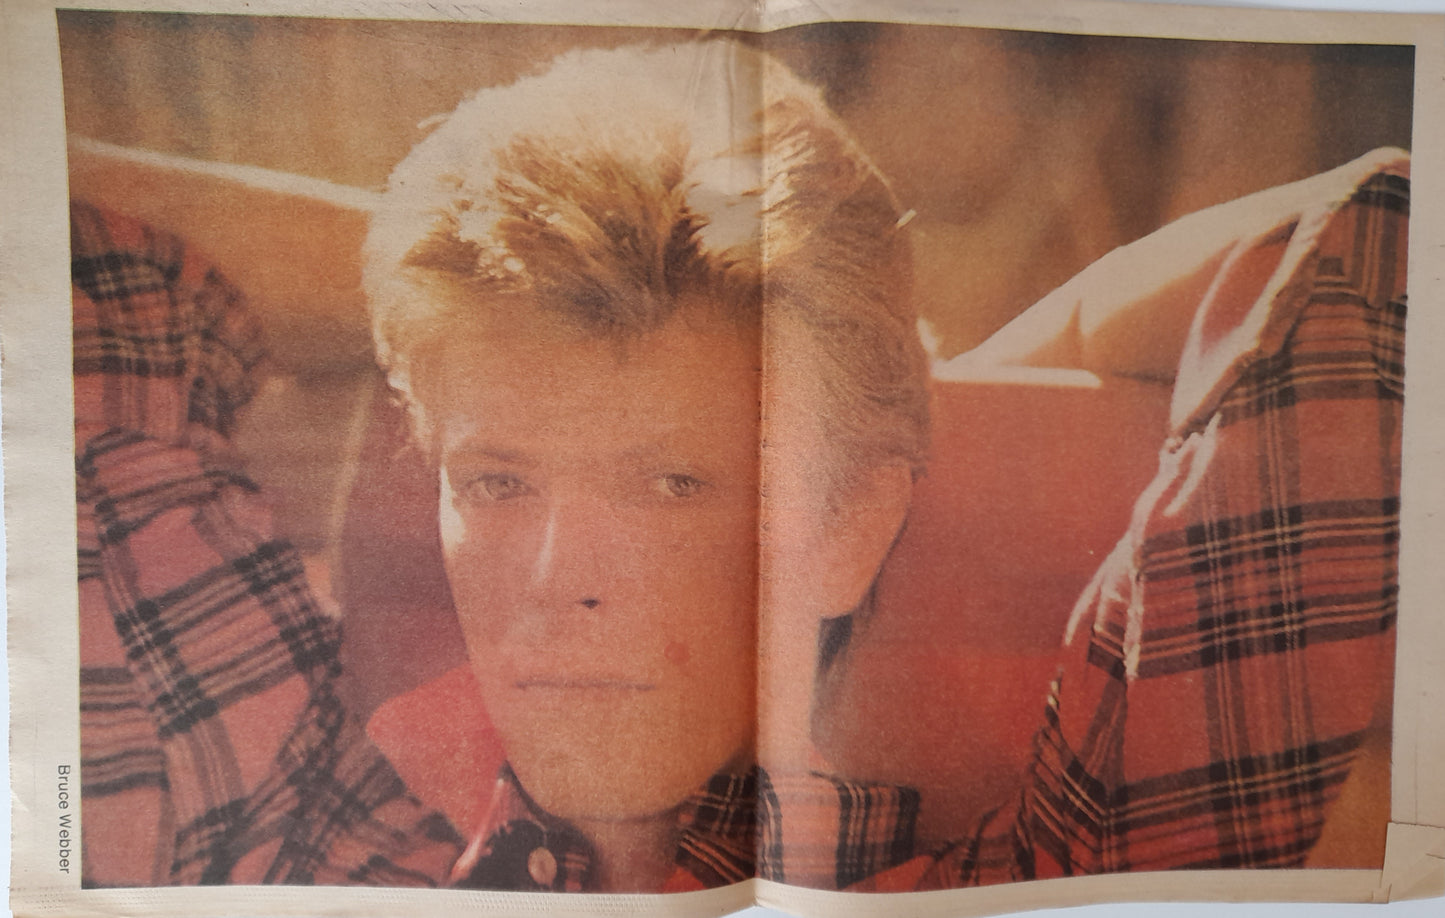 David Bowie Isolar 2 Concert  Tour Programme Newspaper Style